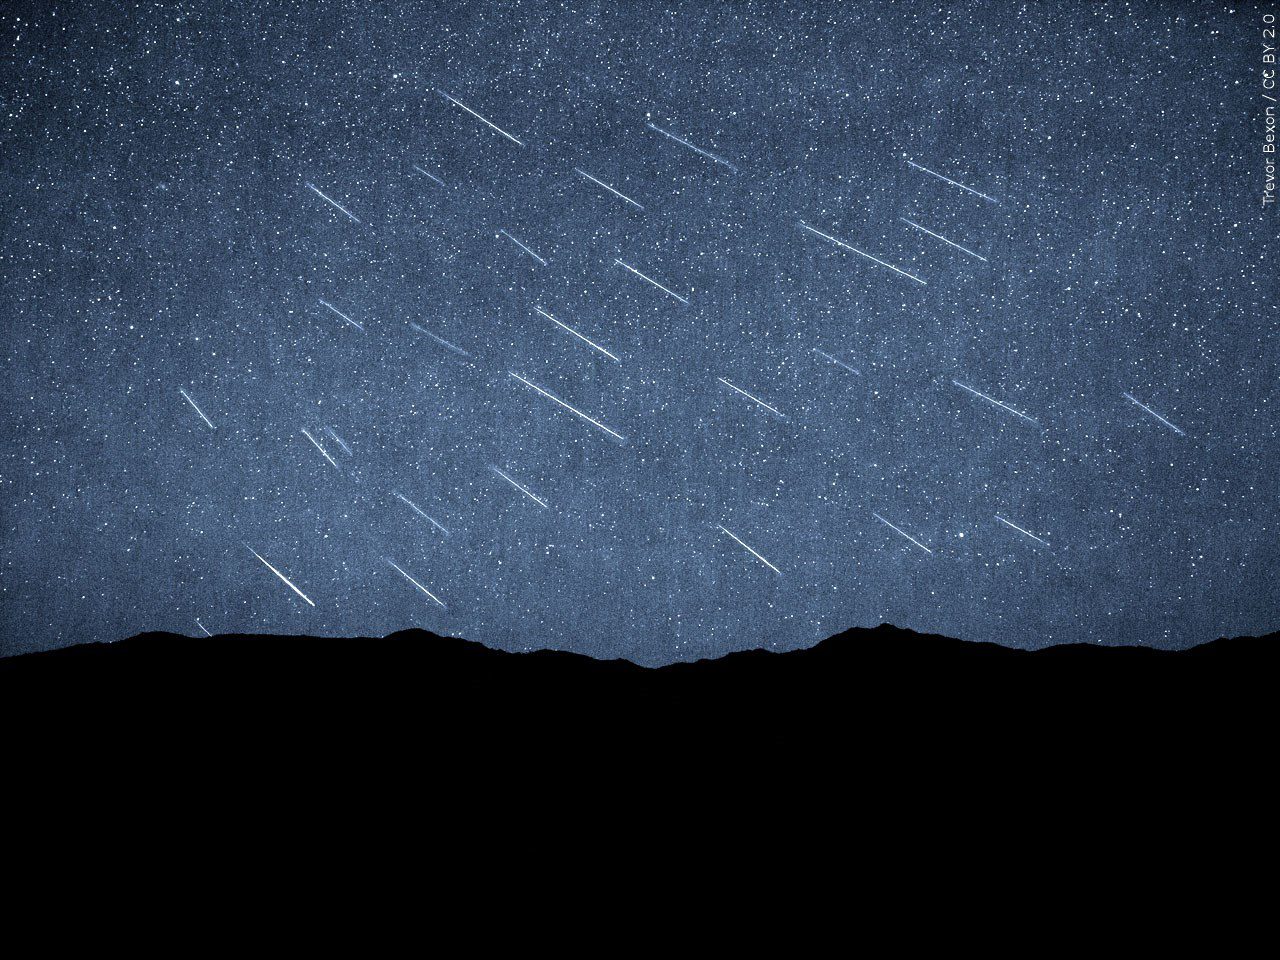 A meteor shower